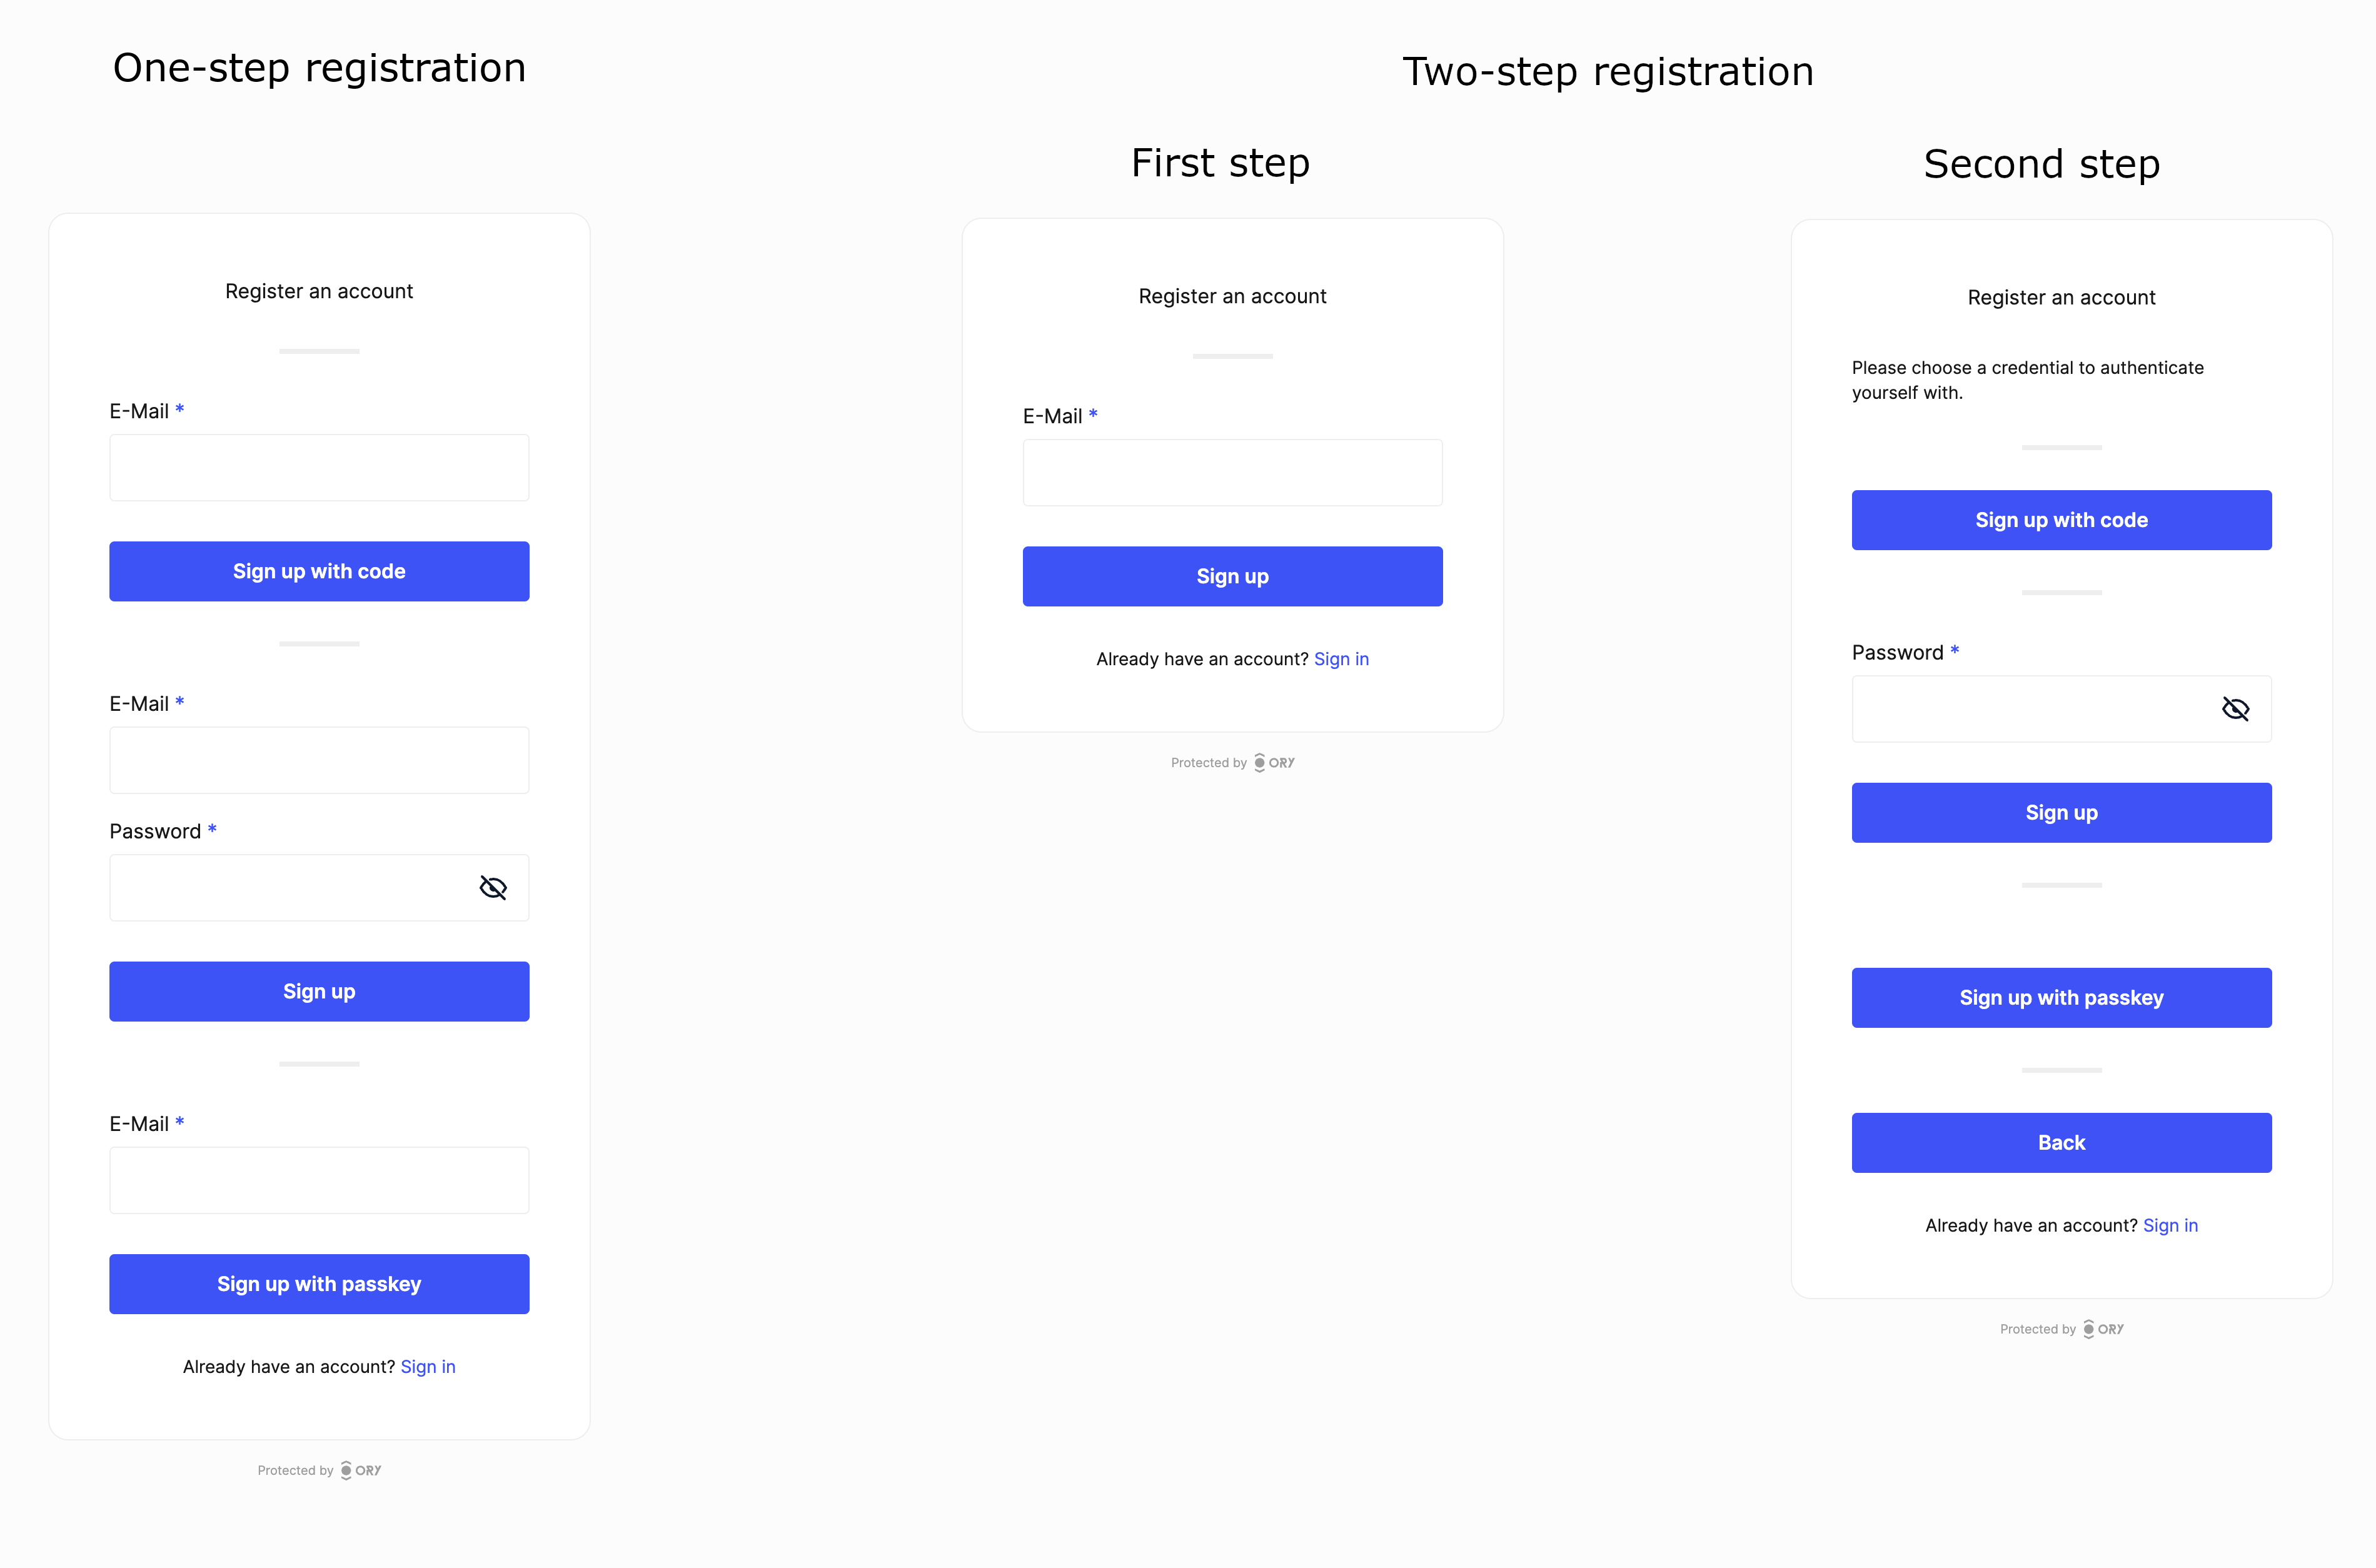 Registration with two-step registration vs one-step registration